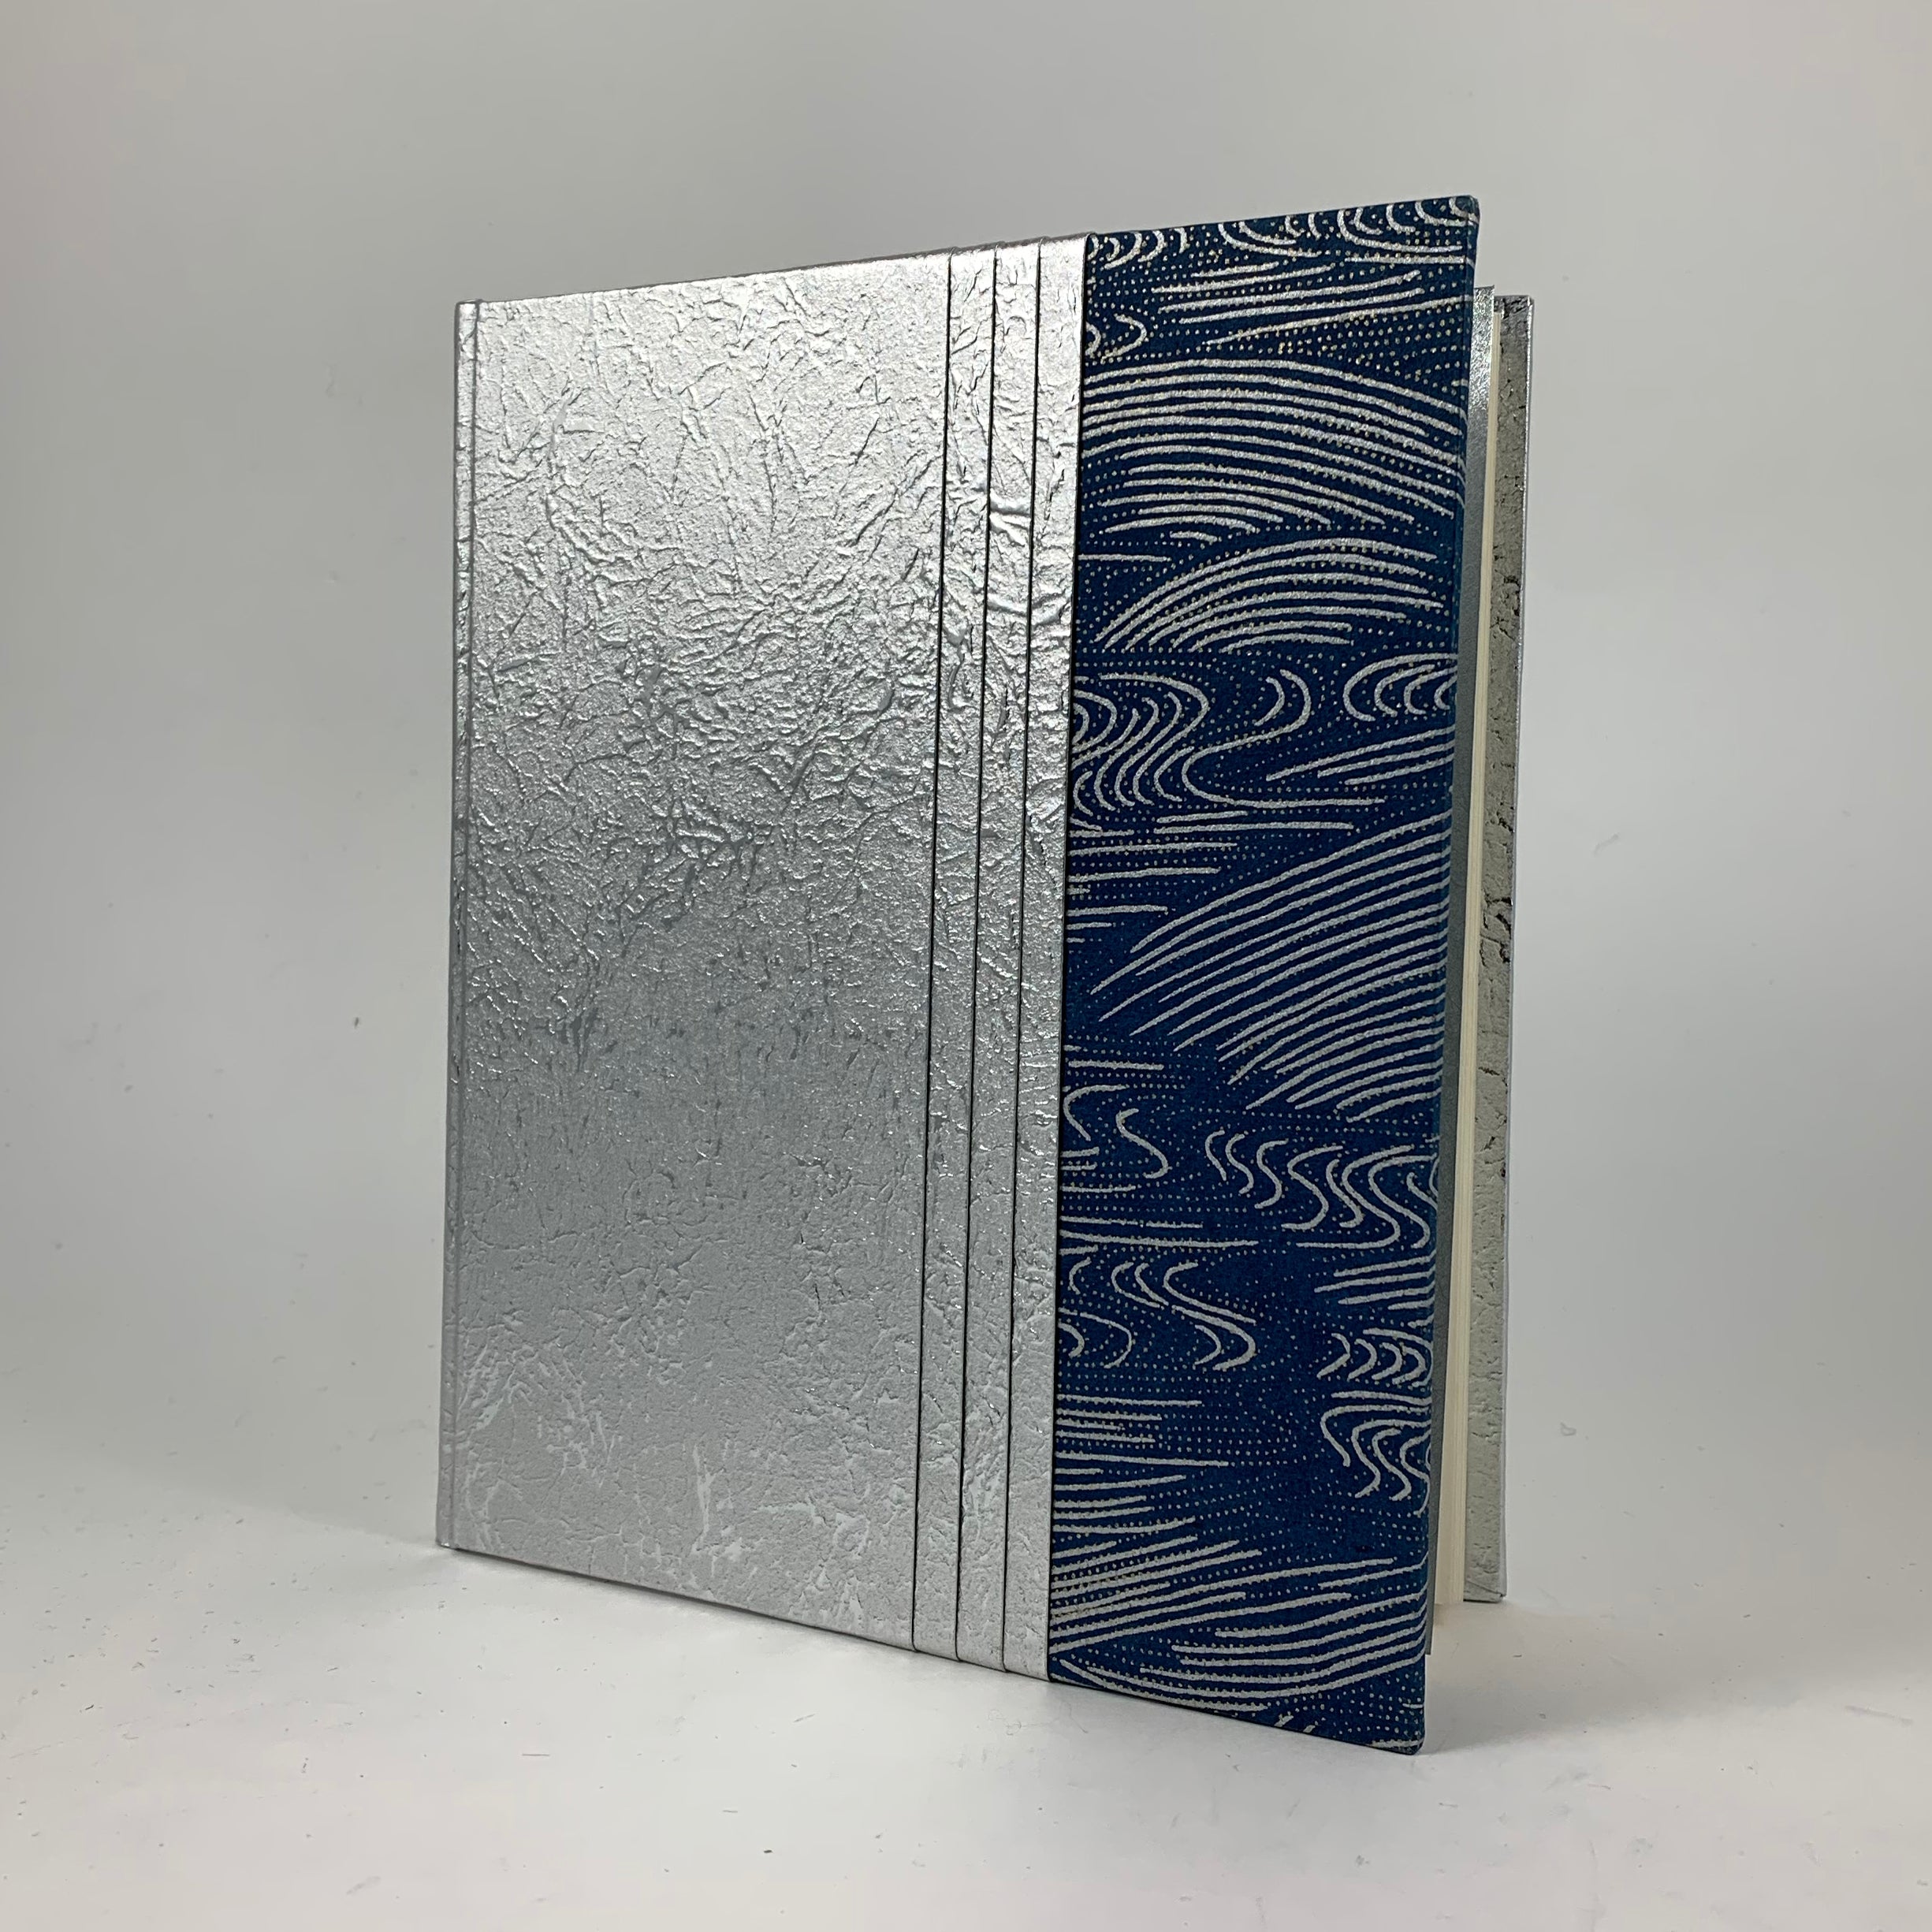 Journal/Sketchbook (Silver Momi/Indigo-Silver Wave Chiyogami, w. Tuxedo Pleat) 6.75" x 5.75"